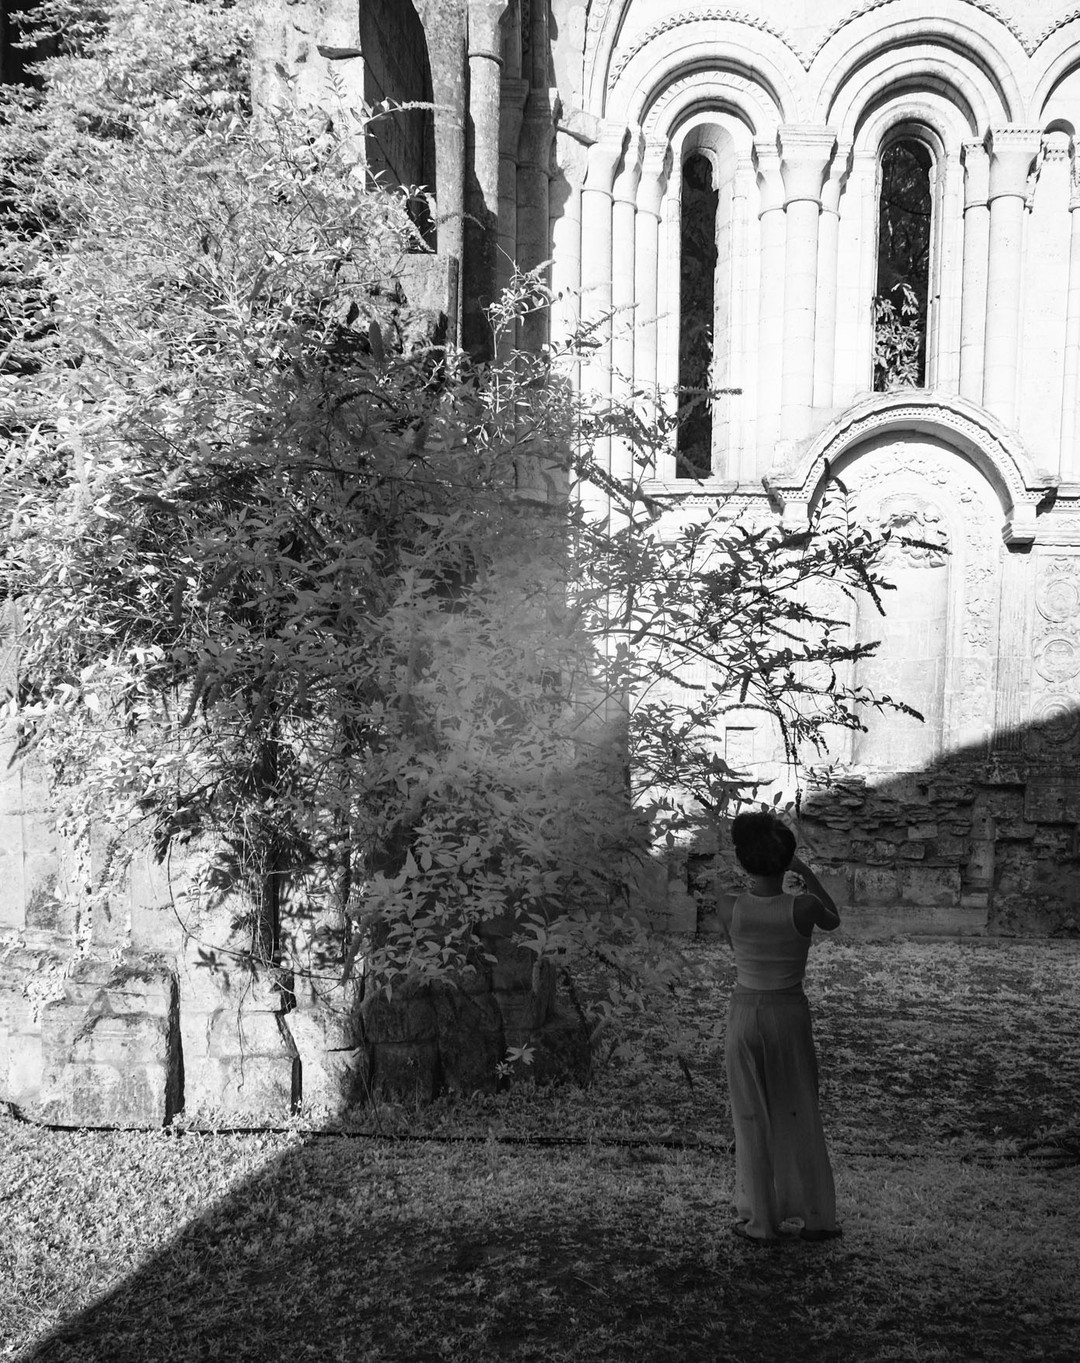 #Fujifilm #XE2 #blackandwhitephotography #bw # bnw #exploretocreate #ir #infrared #infraredphotography #infrared_images #creativeir #irphotography #ig_infrared #infraredworld #infraredphoto #infraredcamera #irphoto #irfilter #convertedcamera #irphotography #monument #igerscharente #francefocus_on #francetourisme #france #french_paradise #church